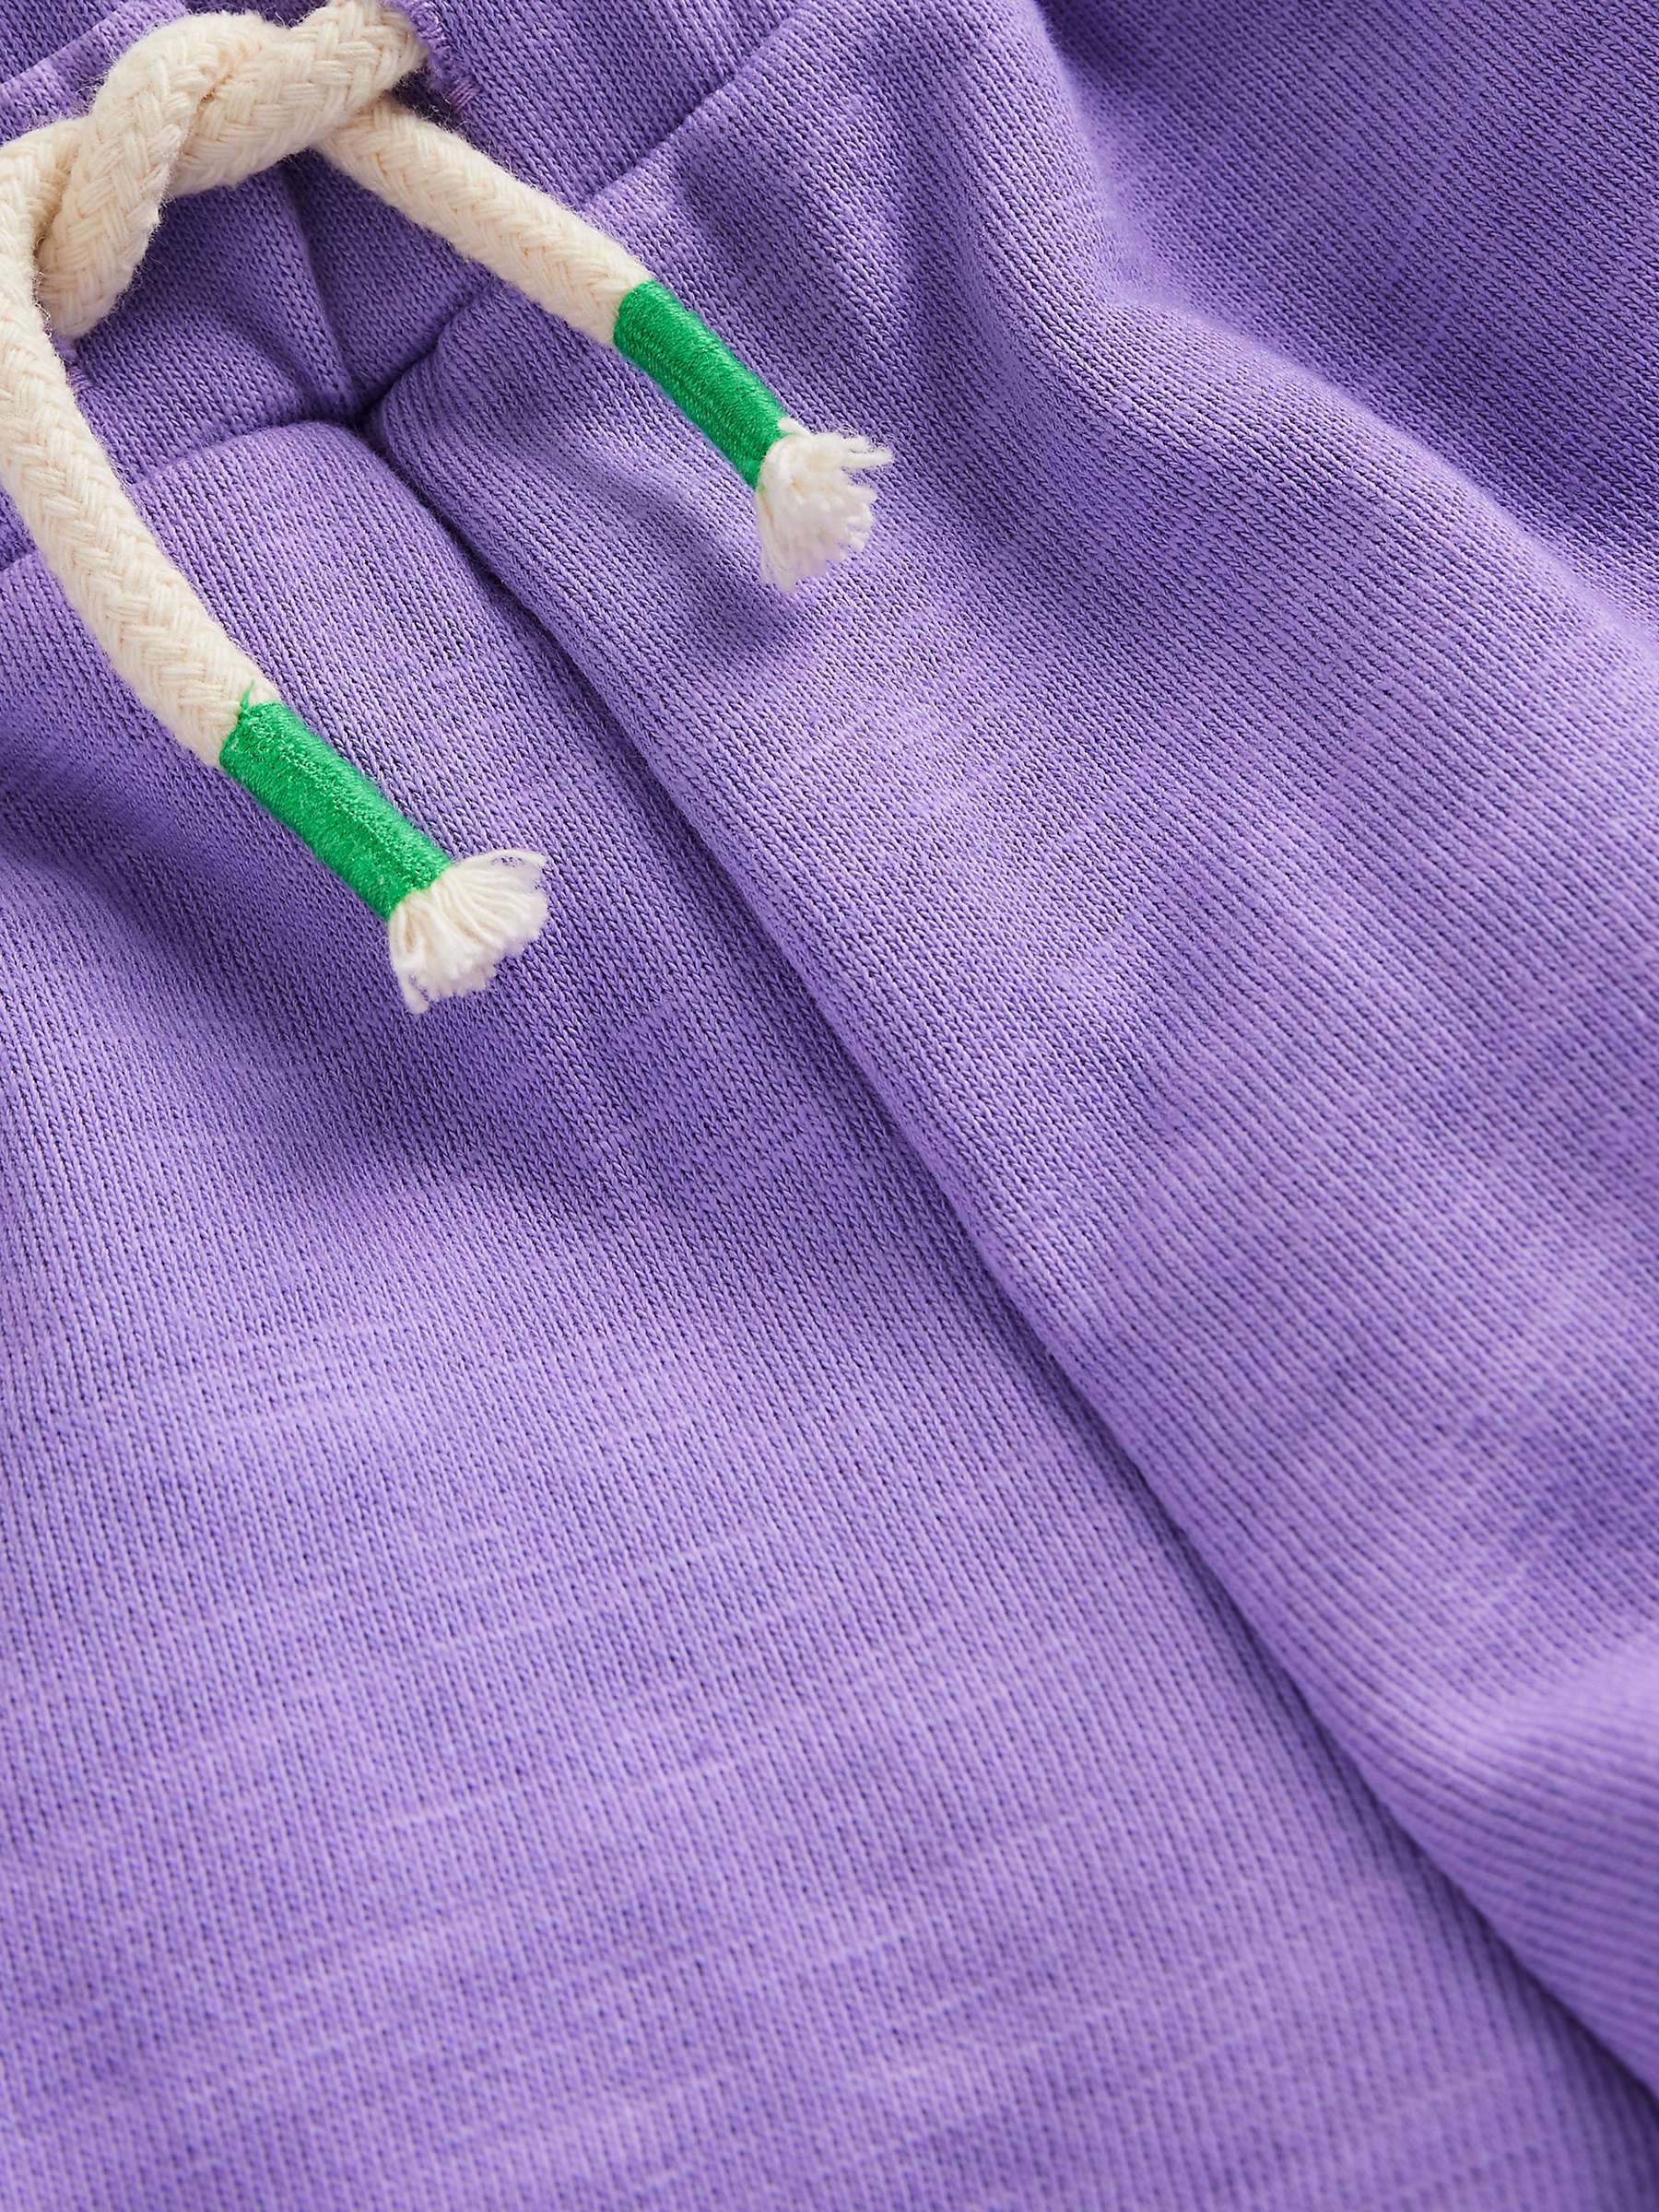 Buy Mini Boden Kids' Pom Trim Jersey Shorts, Crocus Purple Online at johnlewis.com